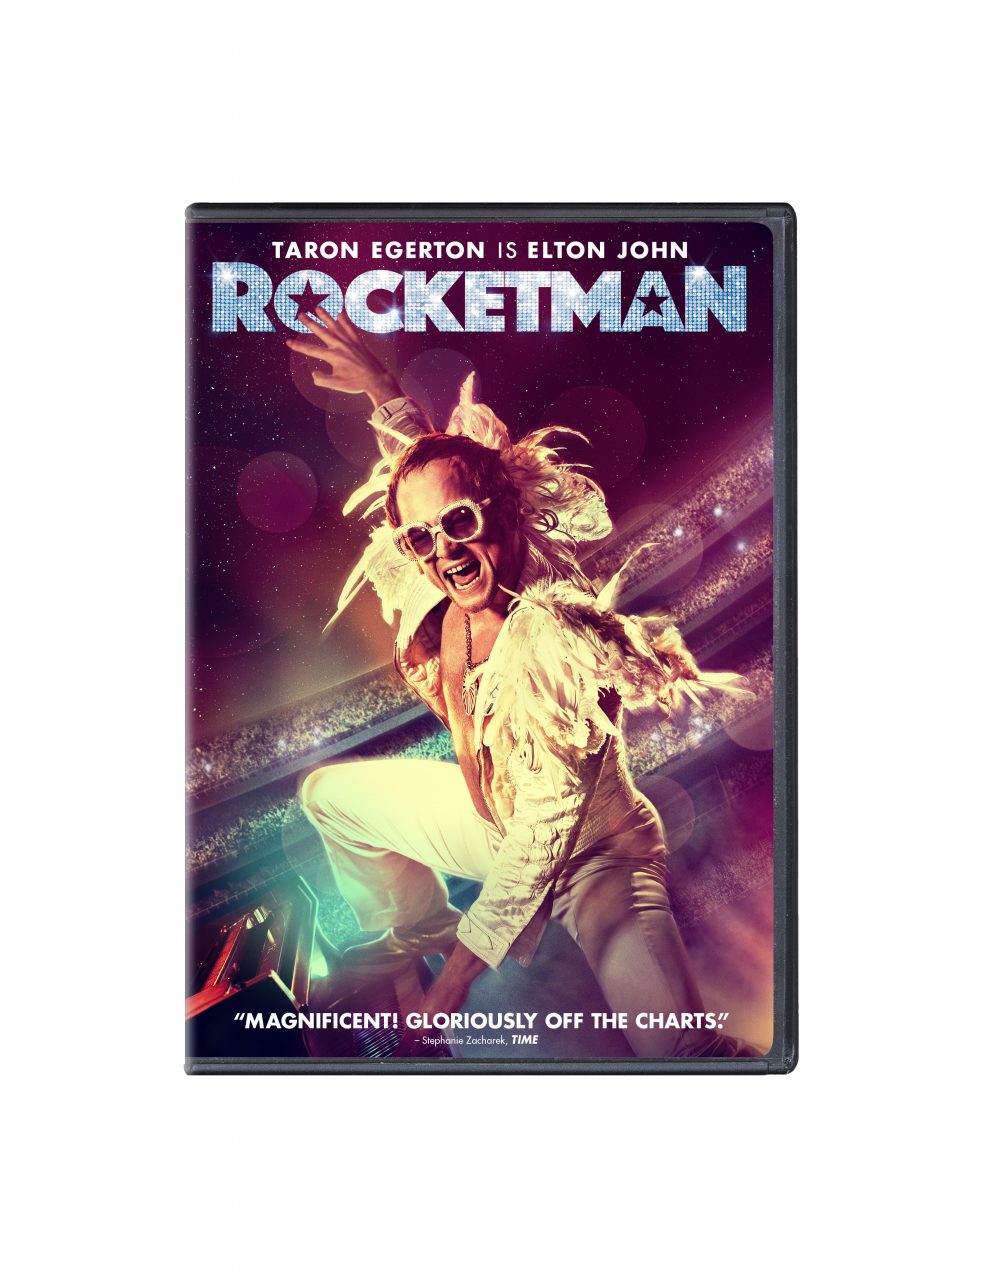 Rocketman DVD cover (Paramount Home Entertainment)